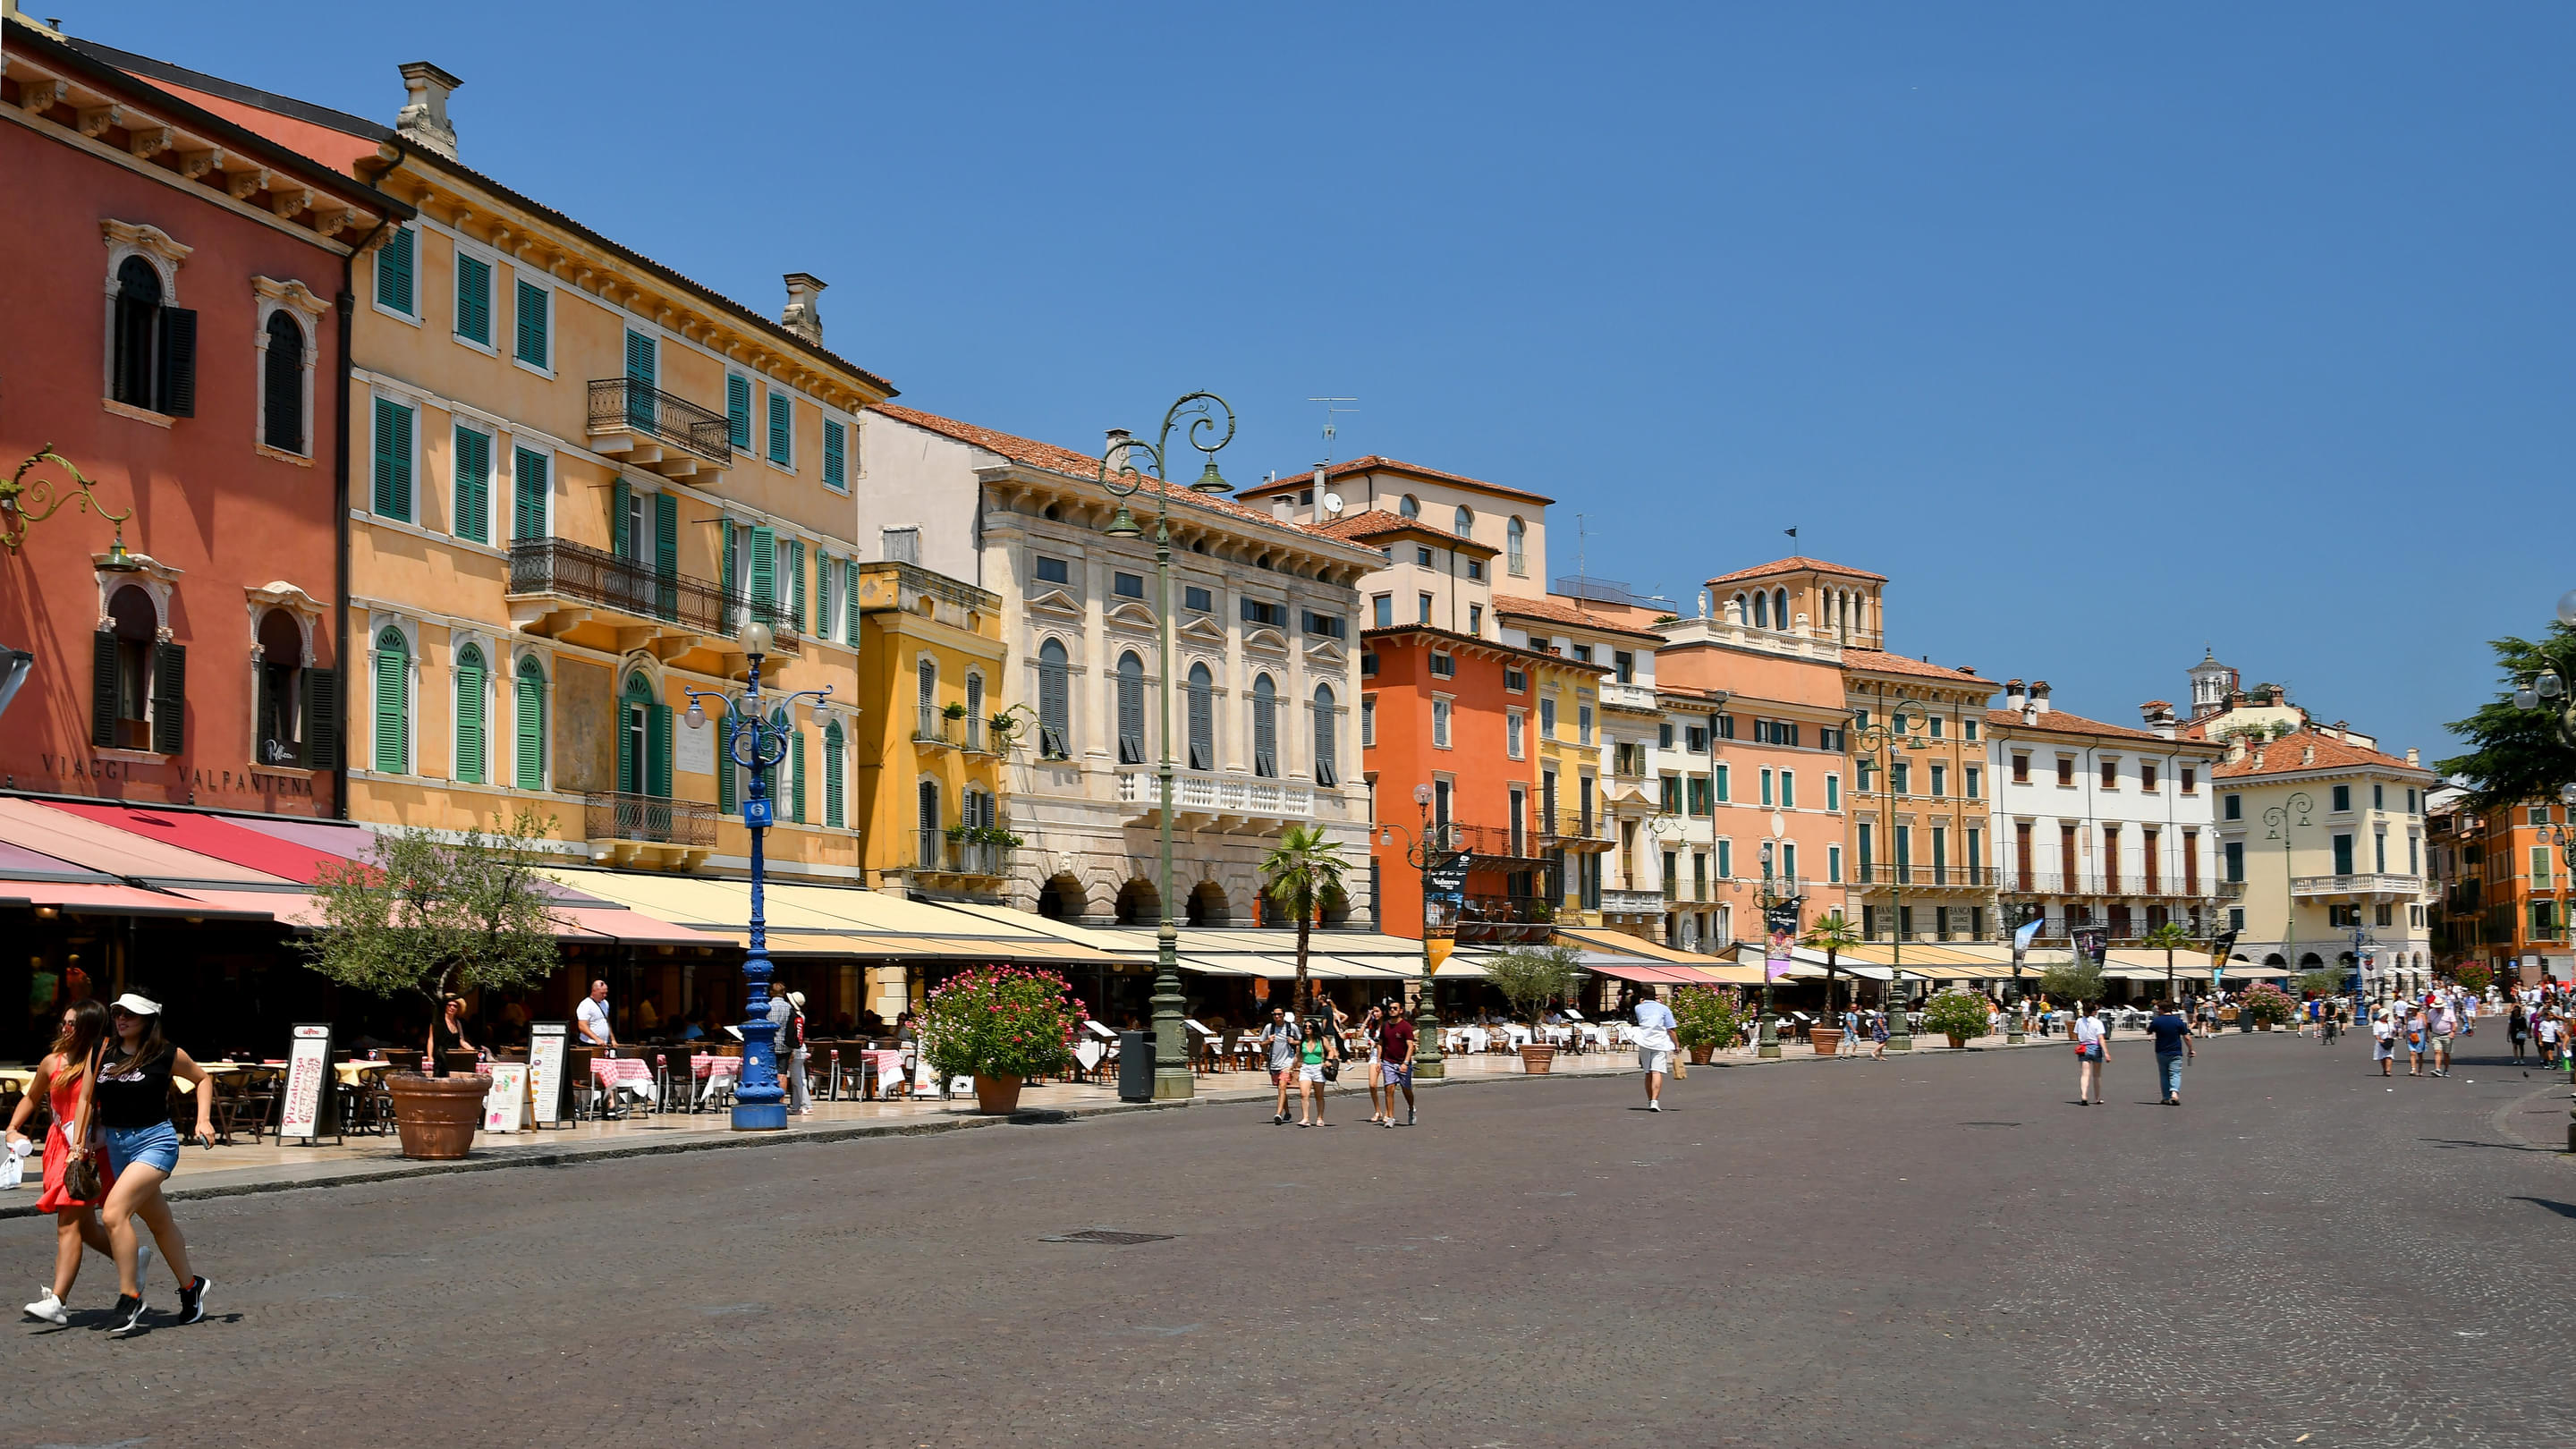 Piazza Bra Overview